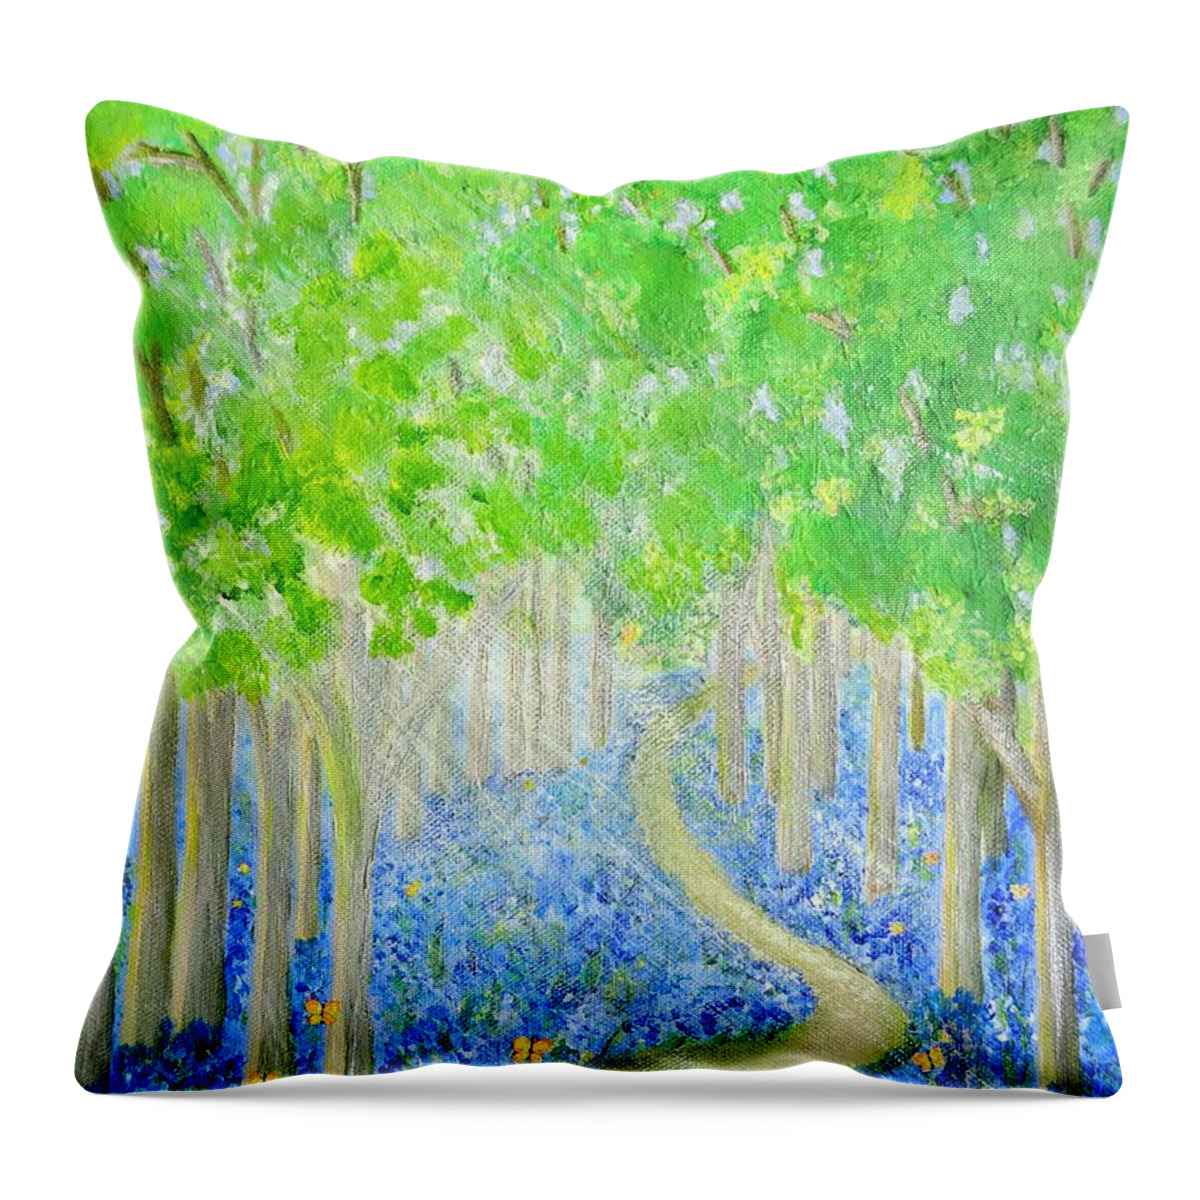 Bluebell Throw Pillow featuring the painting Bluebell Wood with Butterflies by Karen Jane Jones